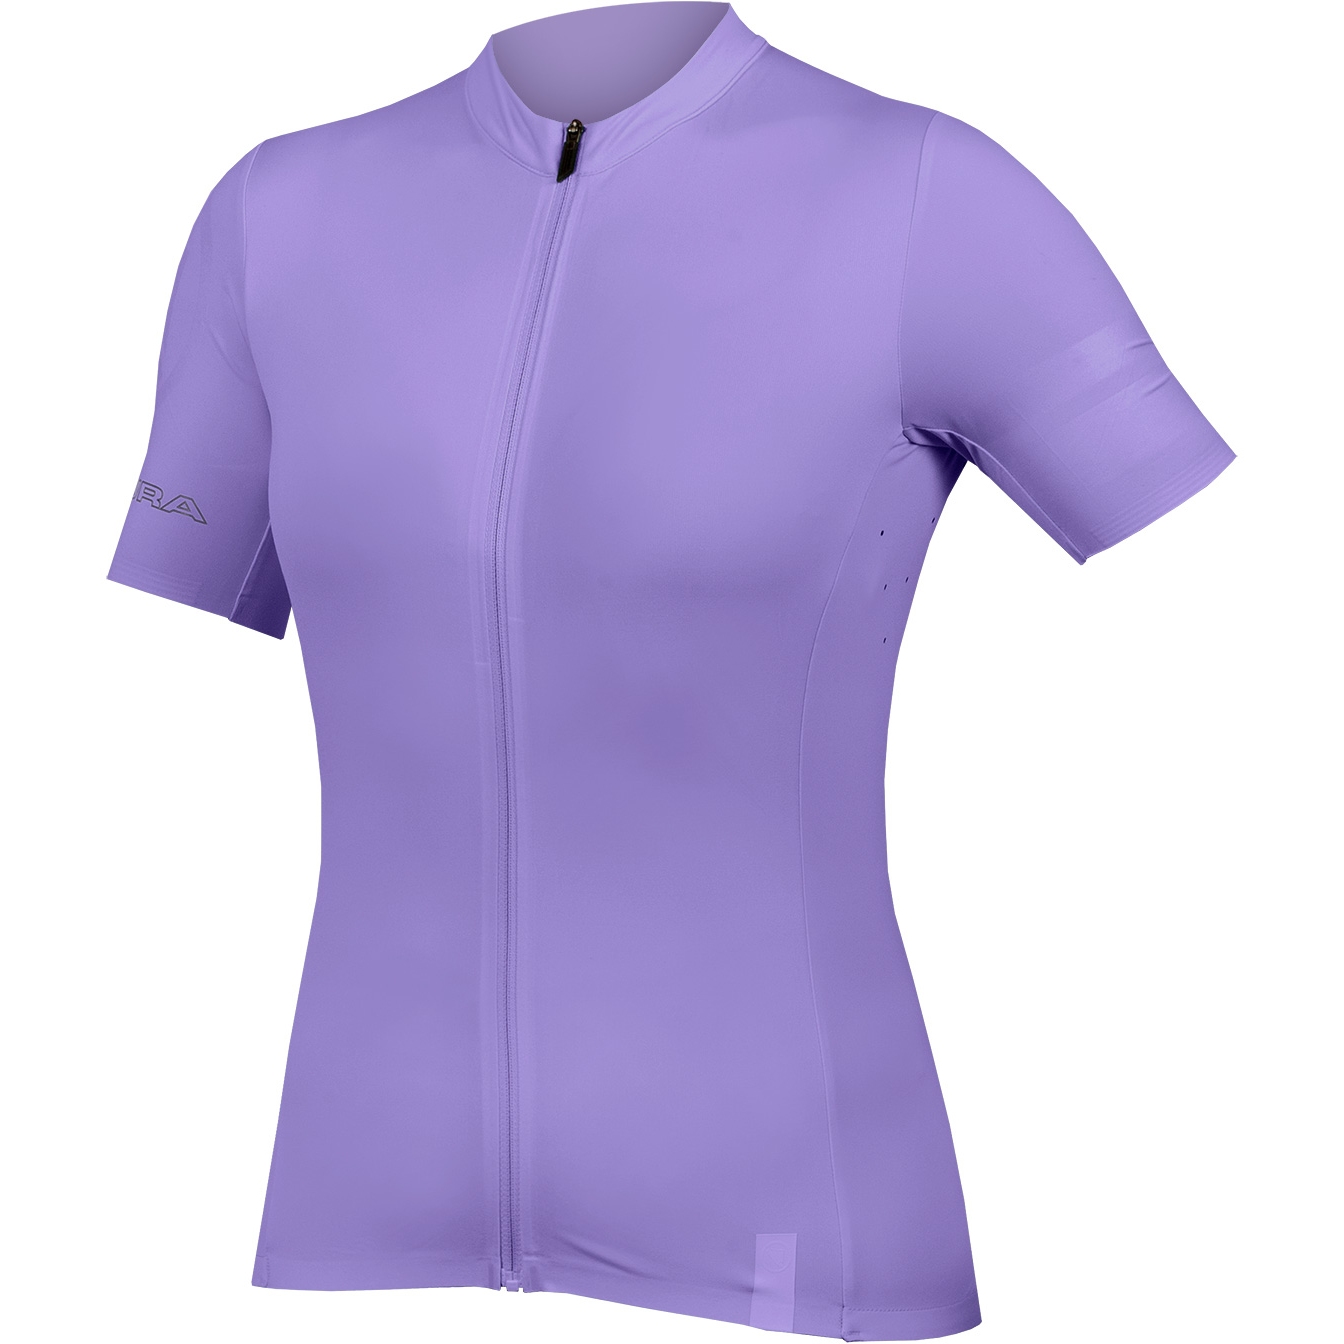 Produktbild von Endura Pro SL Kurzarmtrikot Damen - violett